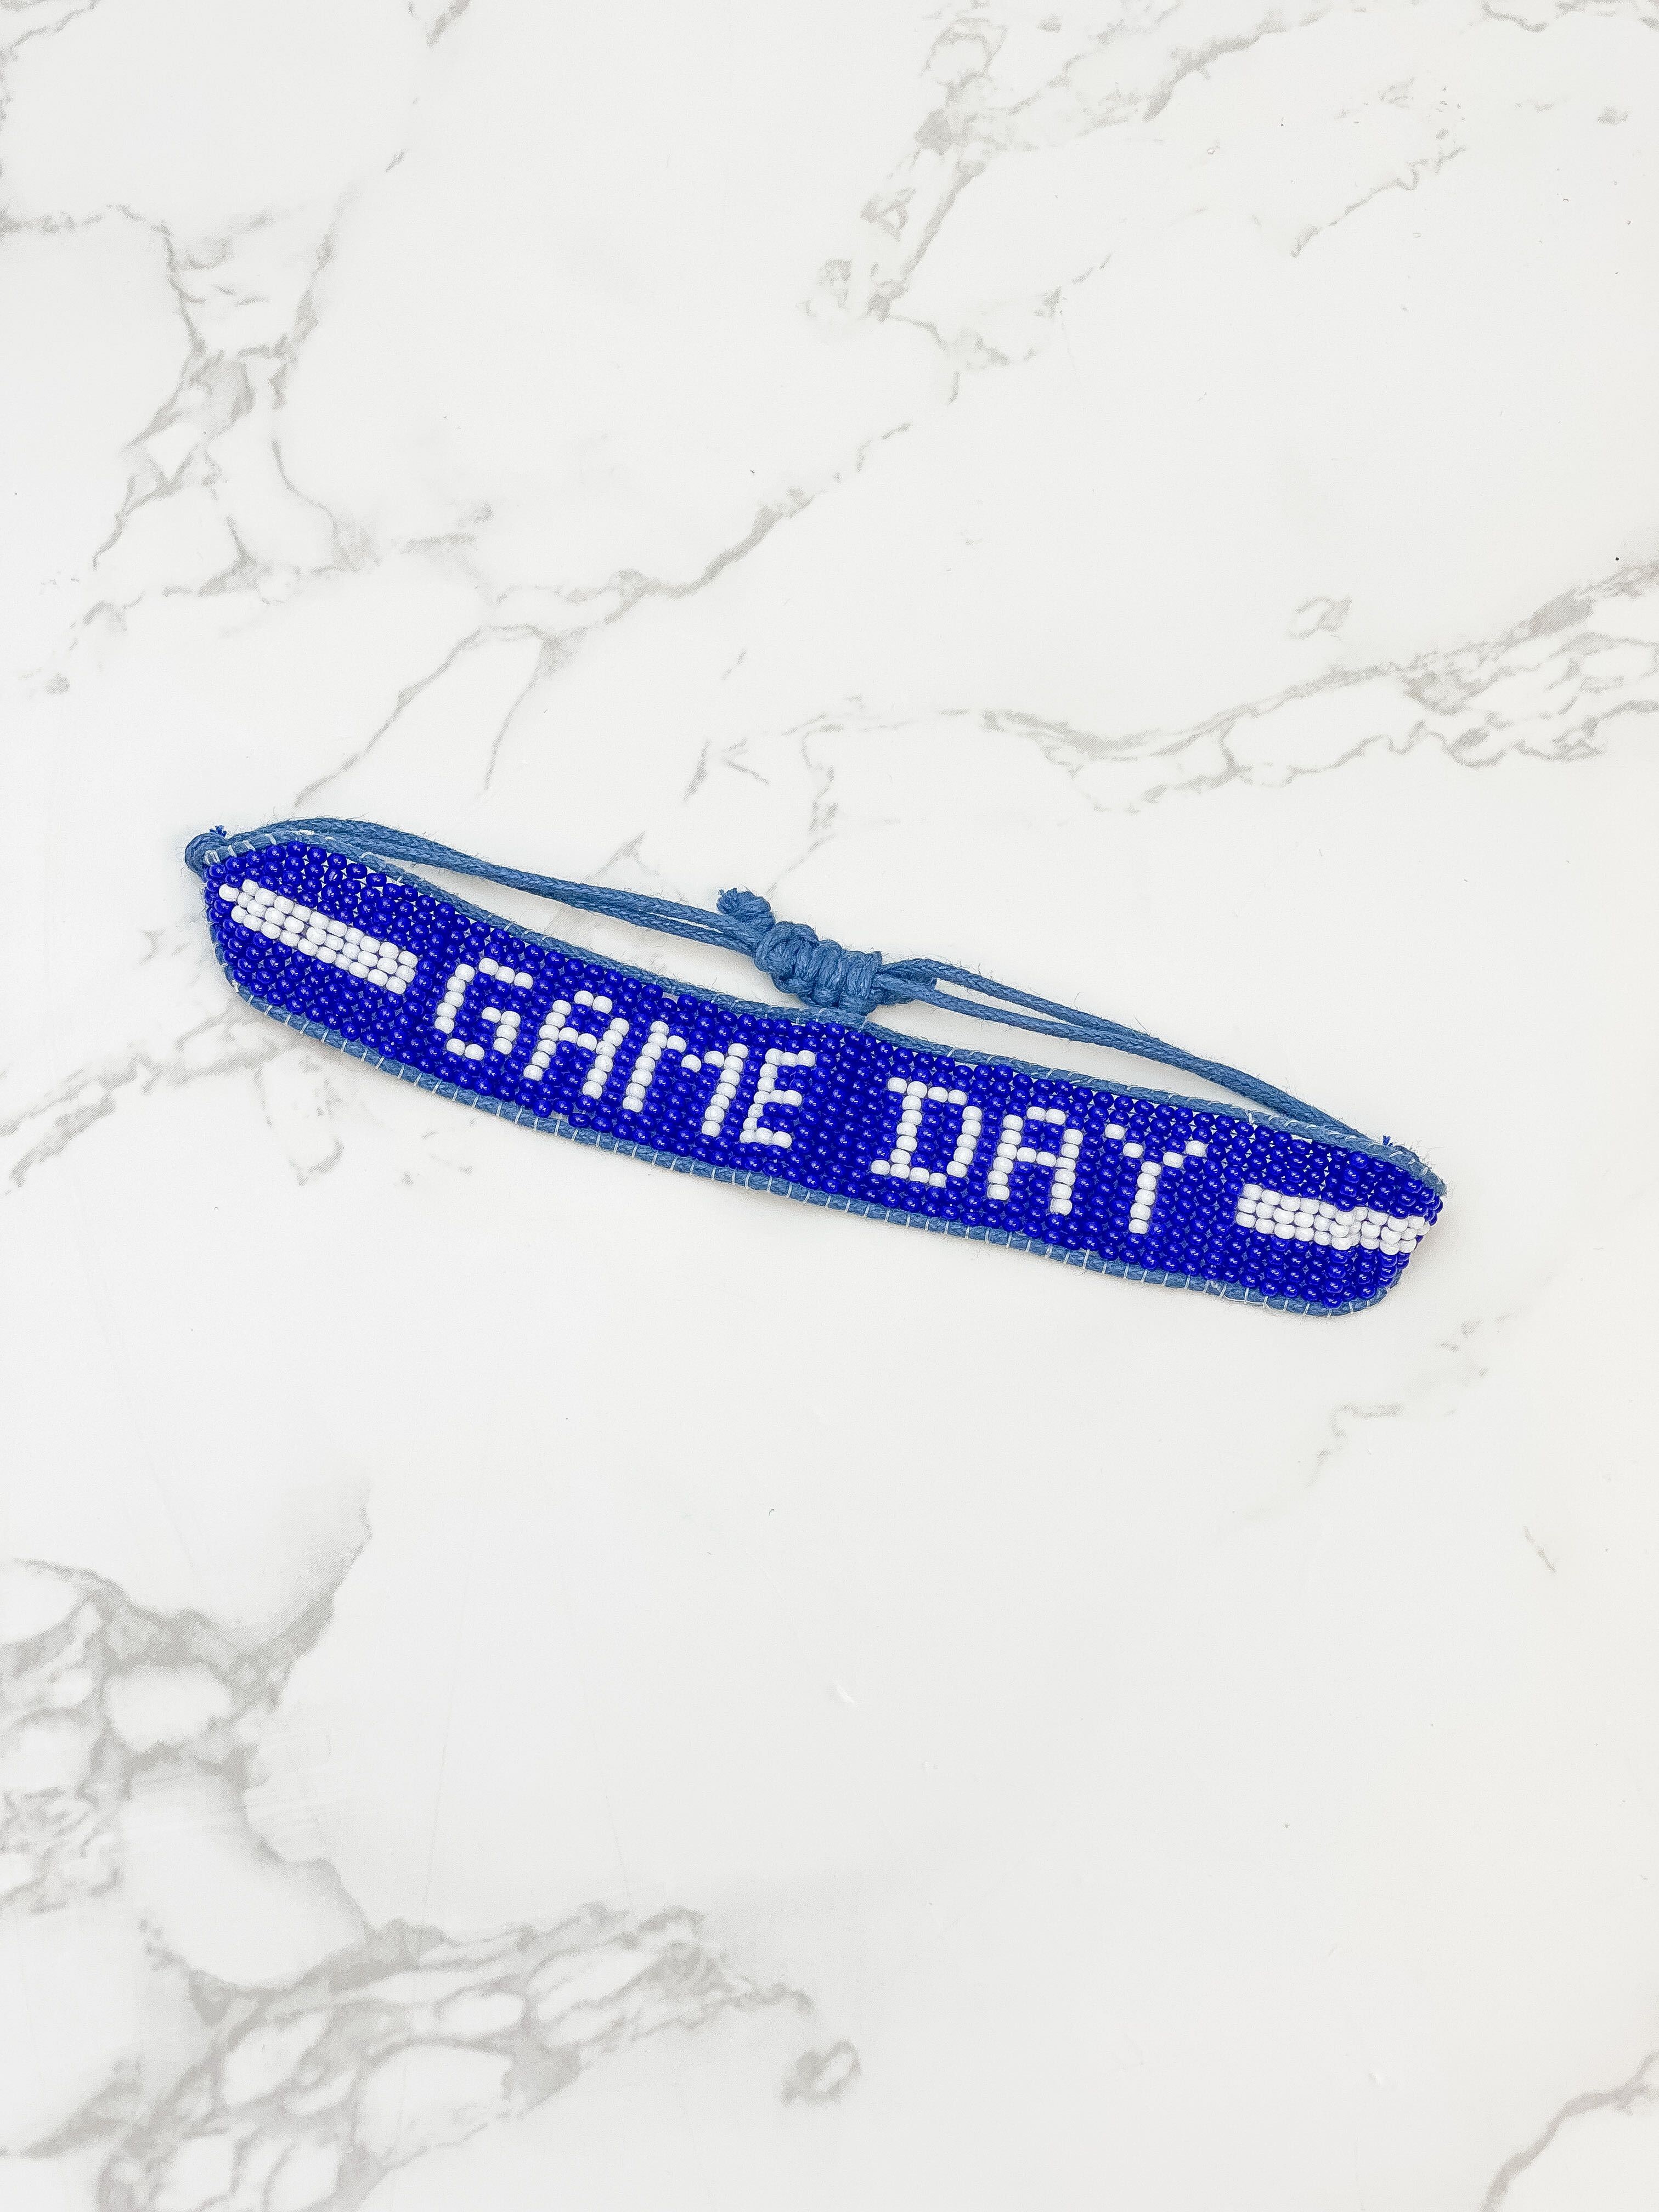 'Game Day' Beaded Adjustable Bracelet - Blue & White